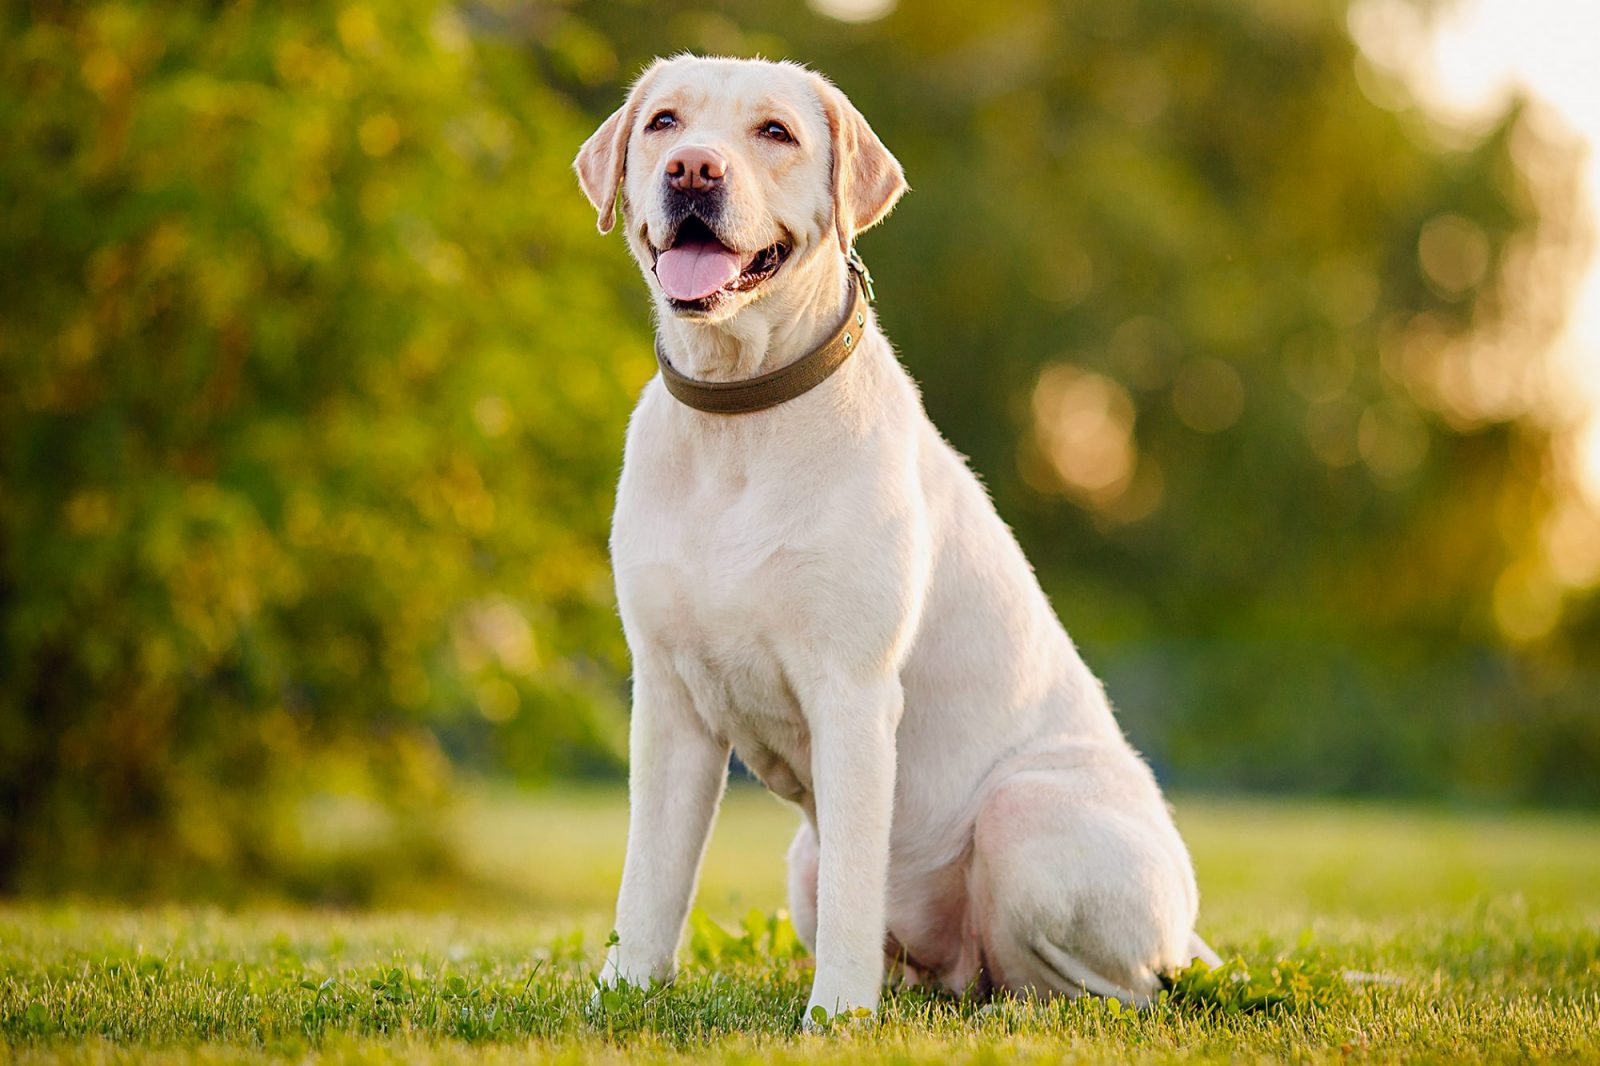 Which Big Dog And Small Dog Are You A Combination Of? 🐶 Quiz Labrador Retriever